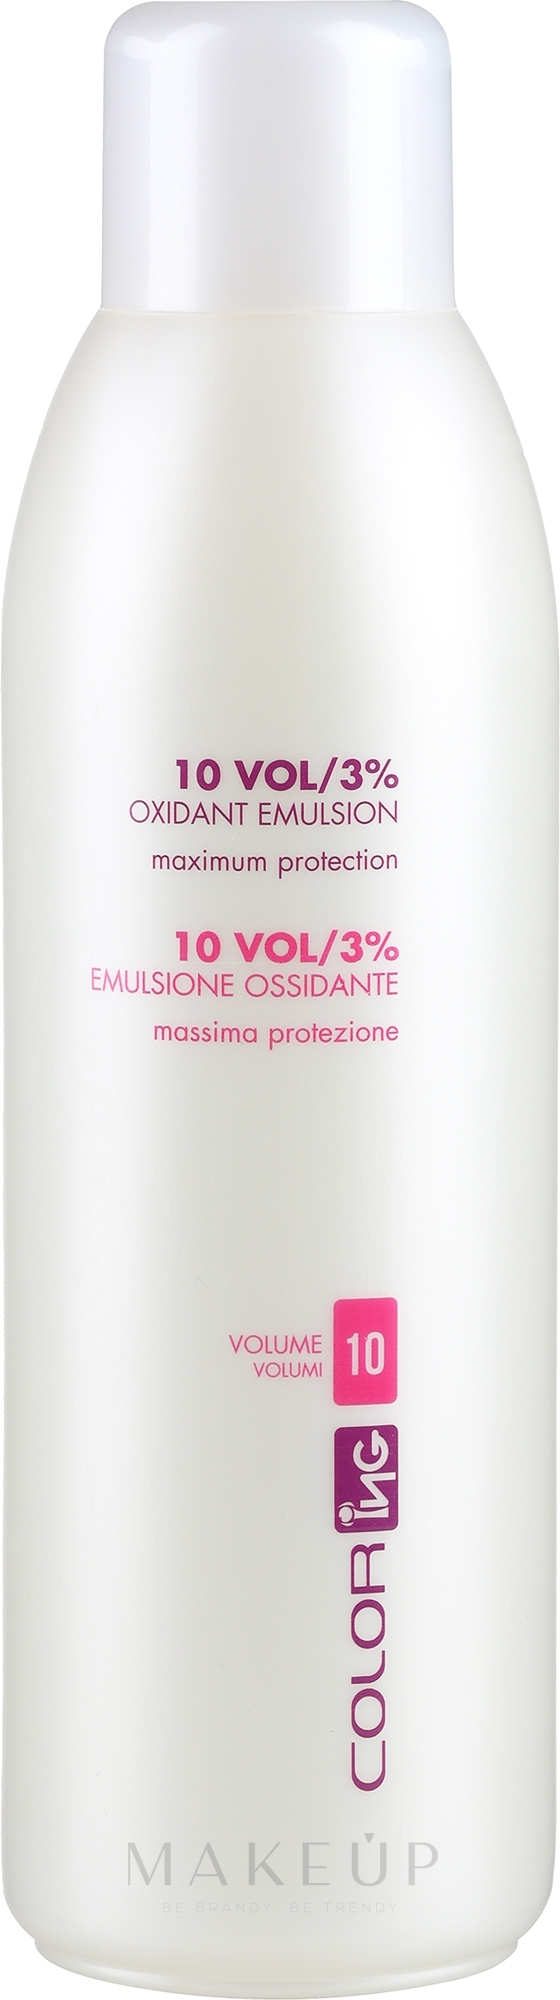 Oxidationsemulsion 3% - ING Professional Color-ING Oxidante Emulsion — Bild 1000 ml